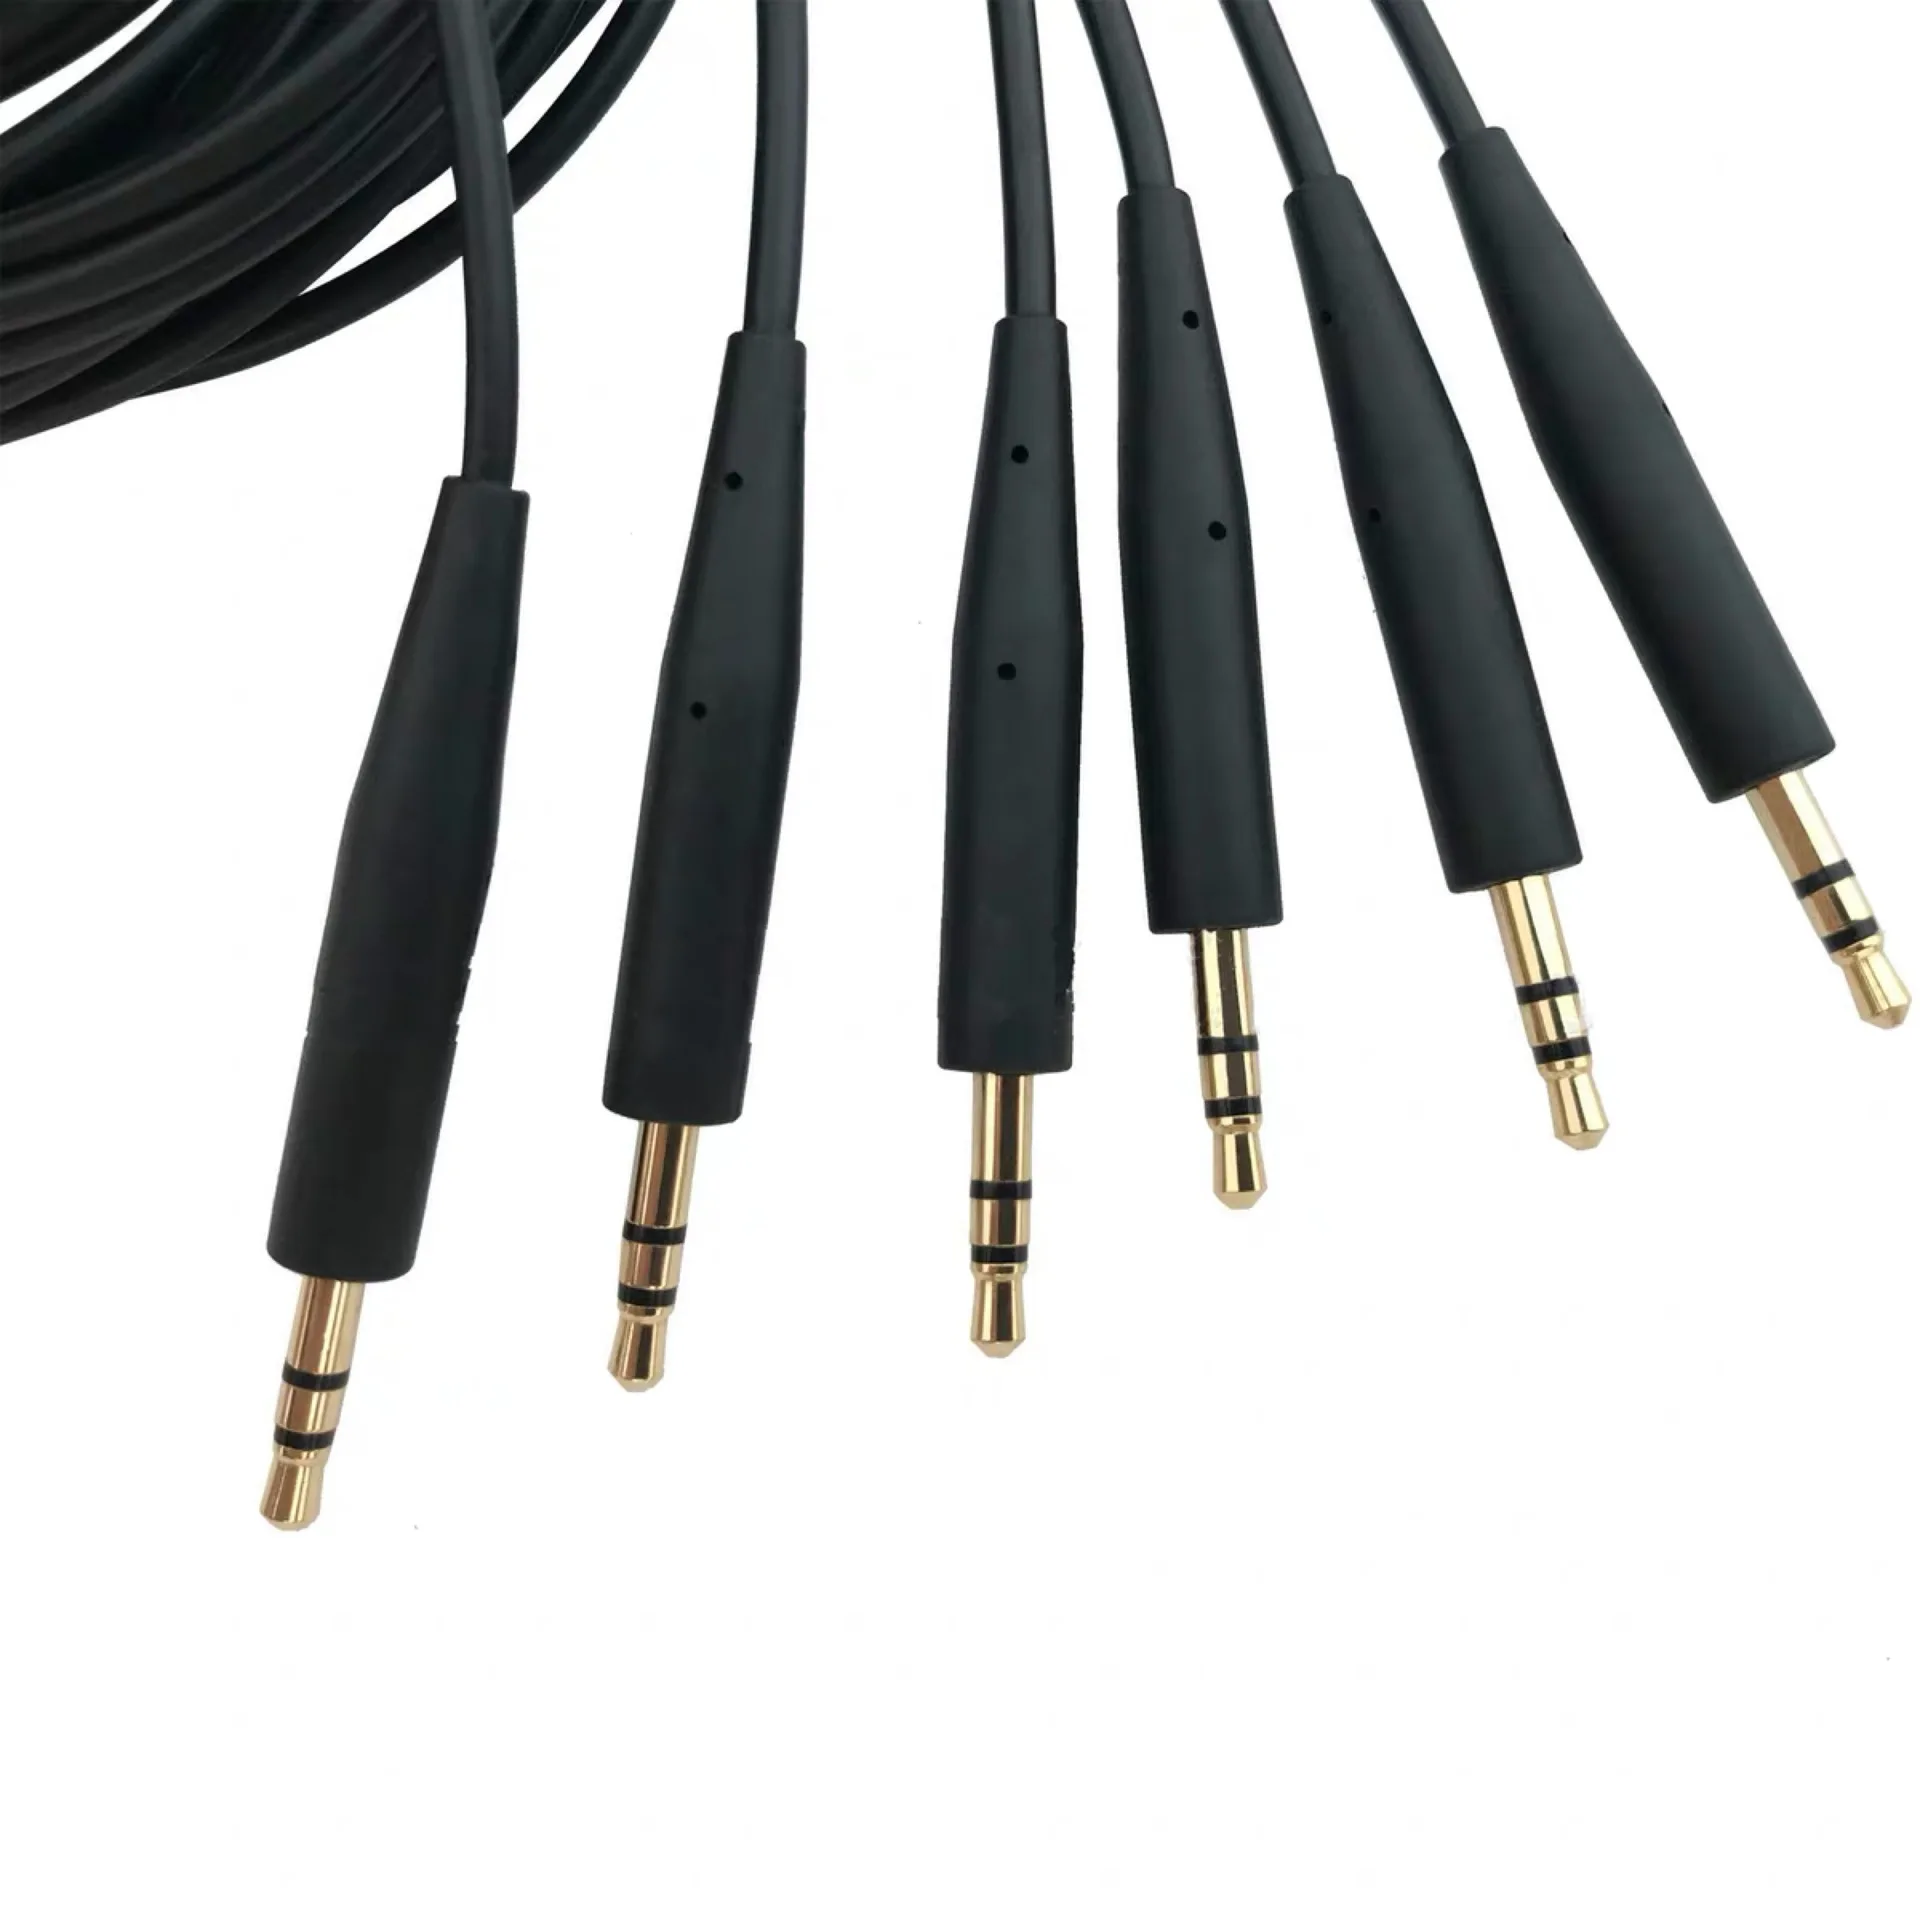 Mic Kábel Slúchadiel Audio Kábel Pre QC35 QC25 OE2 soundtrue Soundlink headset s 3,5 na 2,5 párov nahrávanie káble 140 cm